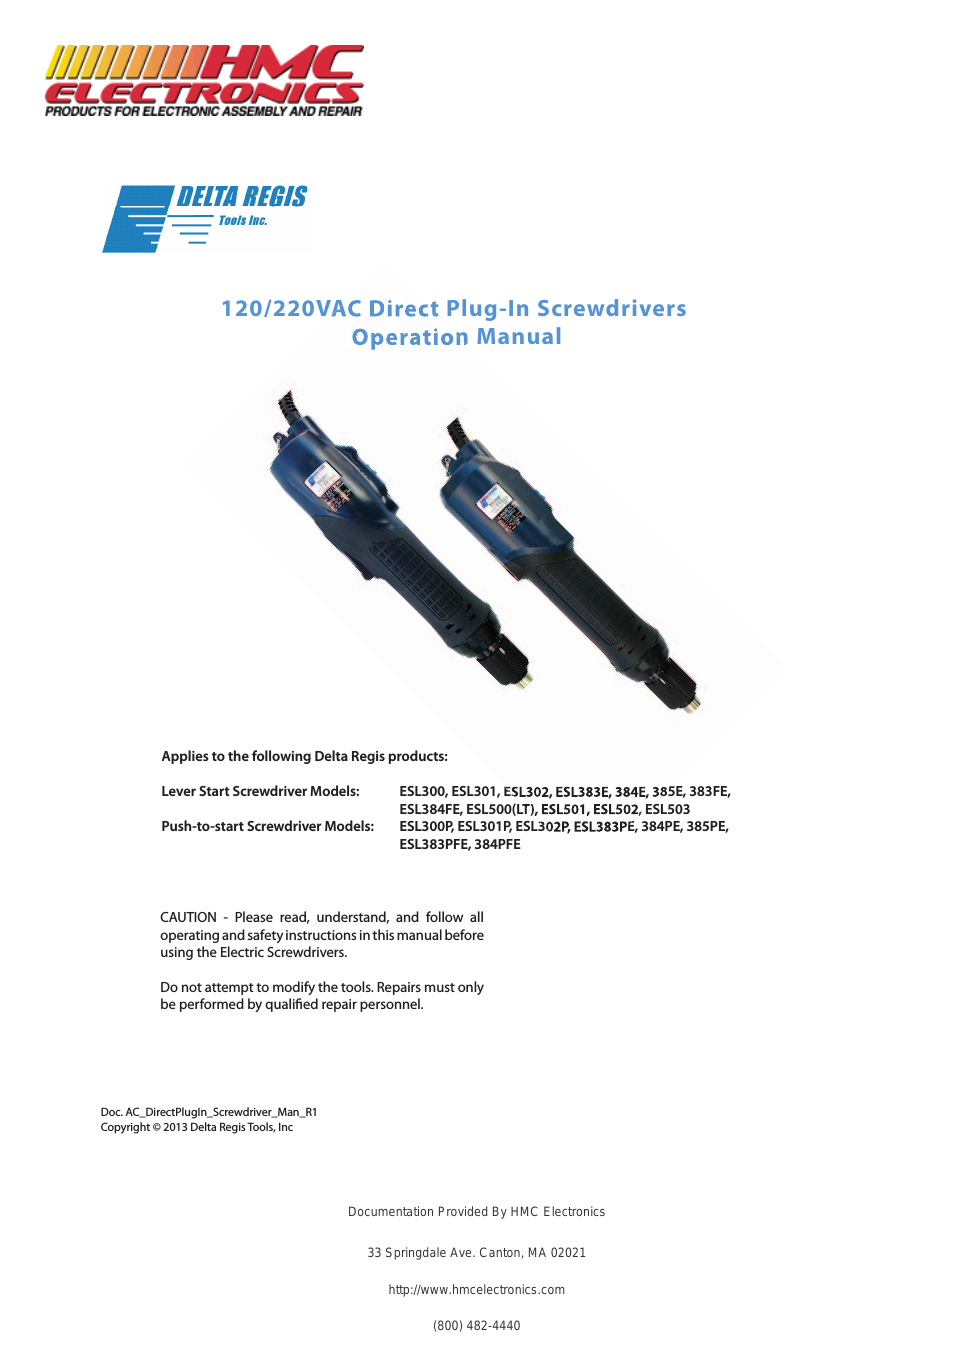 ESL301 Delta Regis Electric Screwdriver, Direct Plug-in